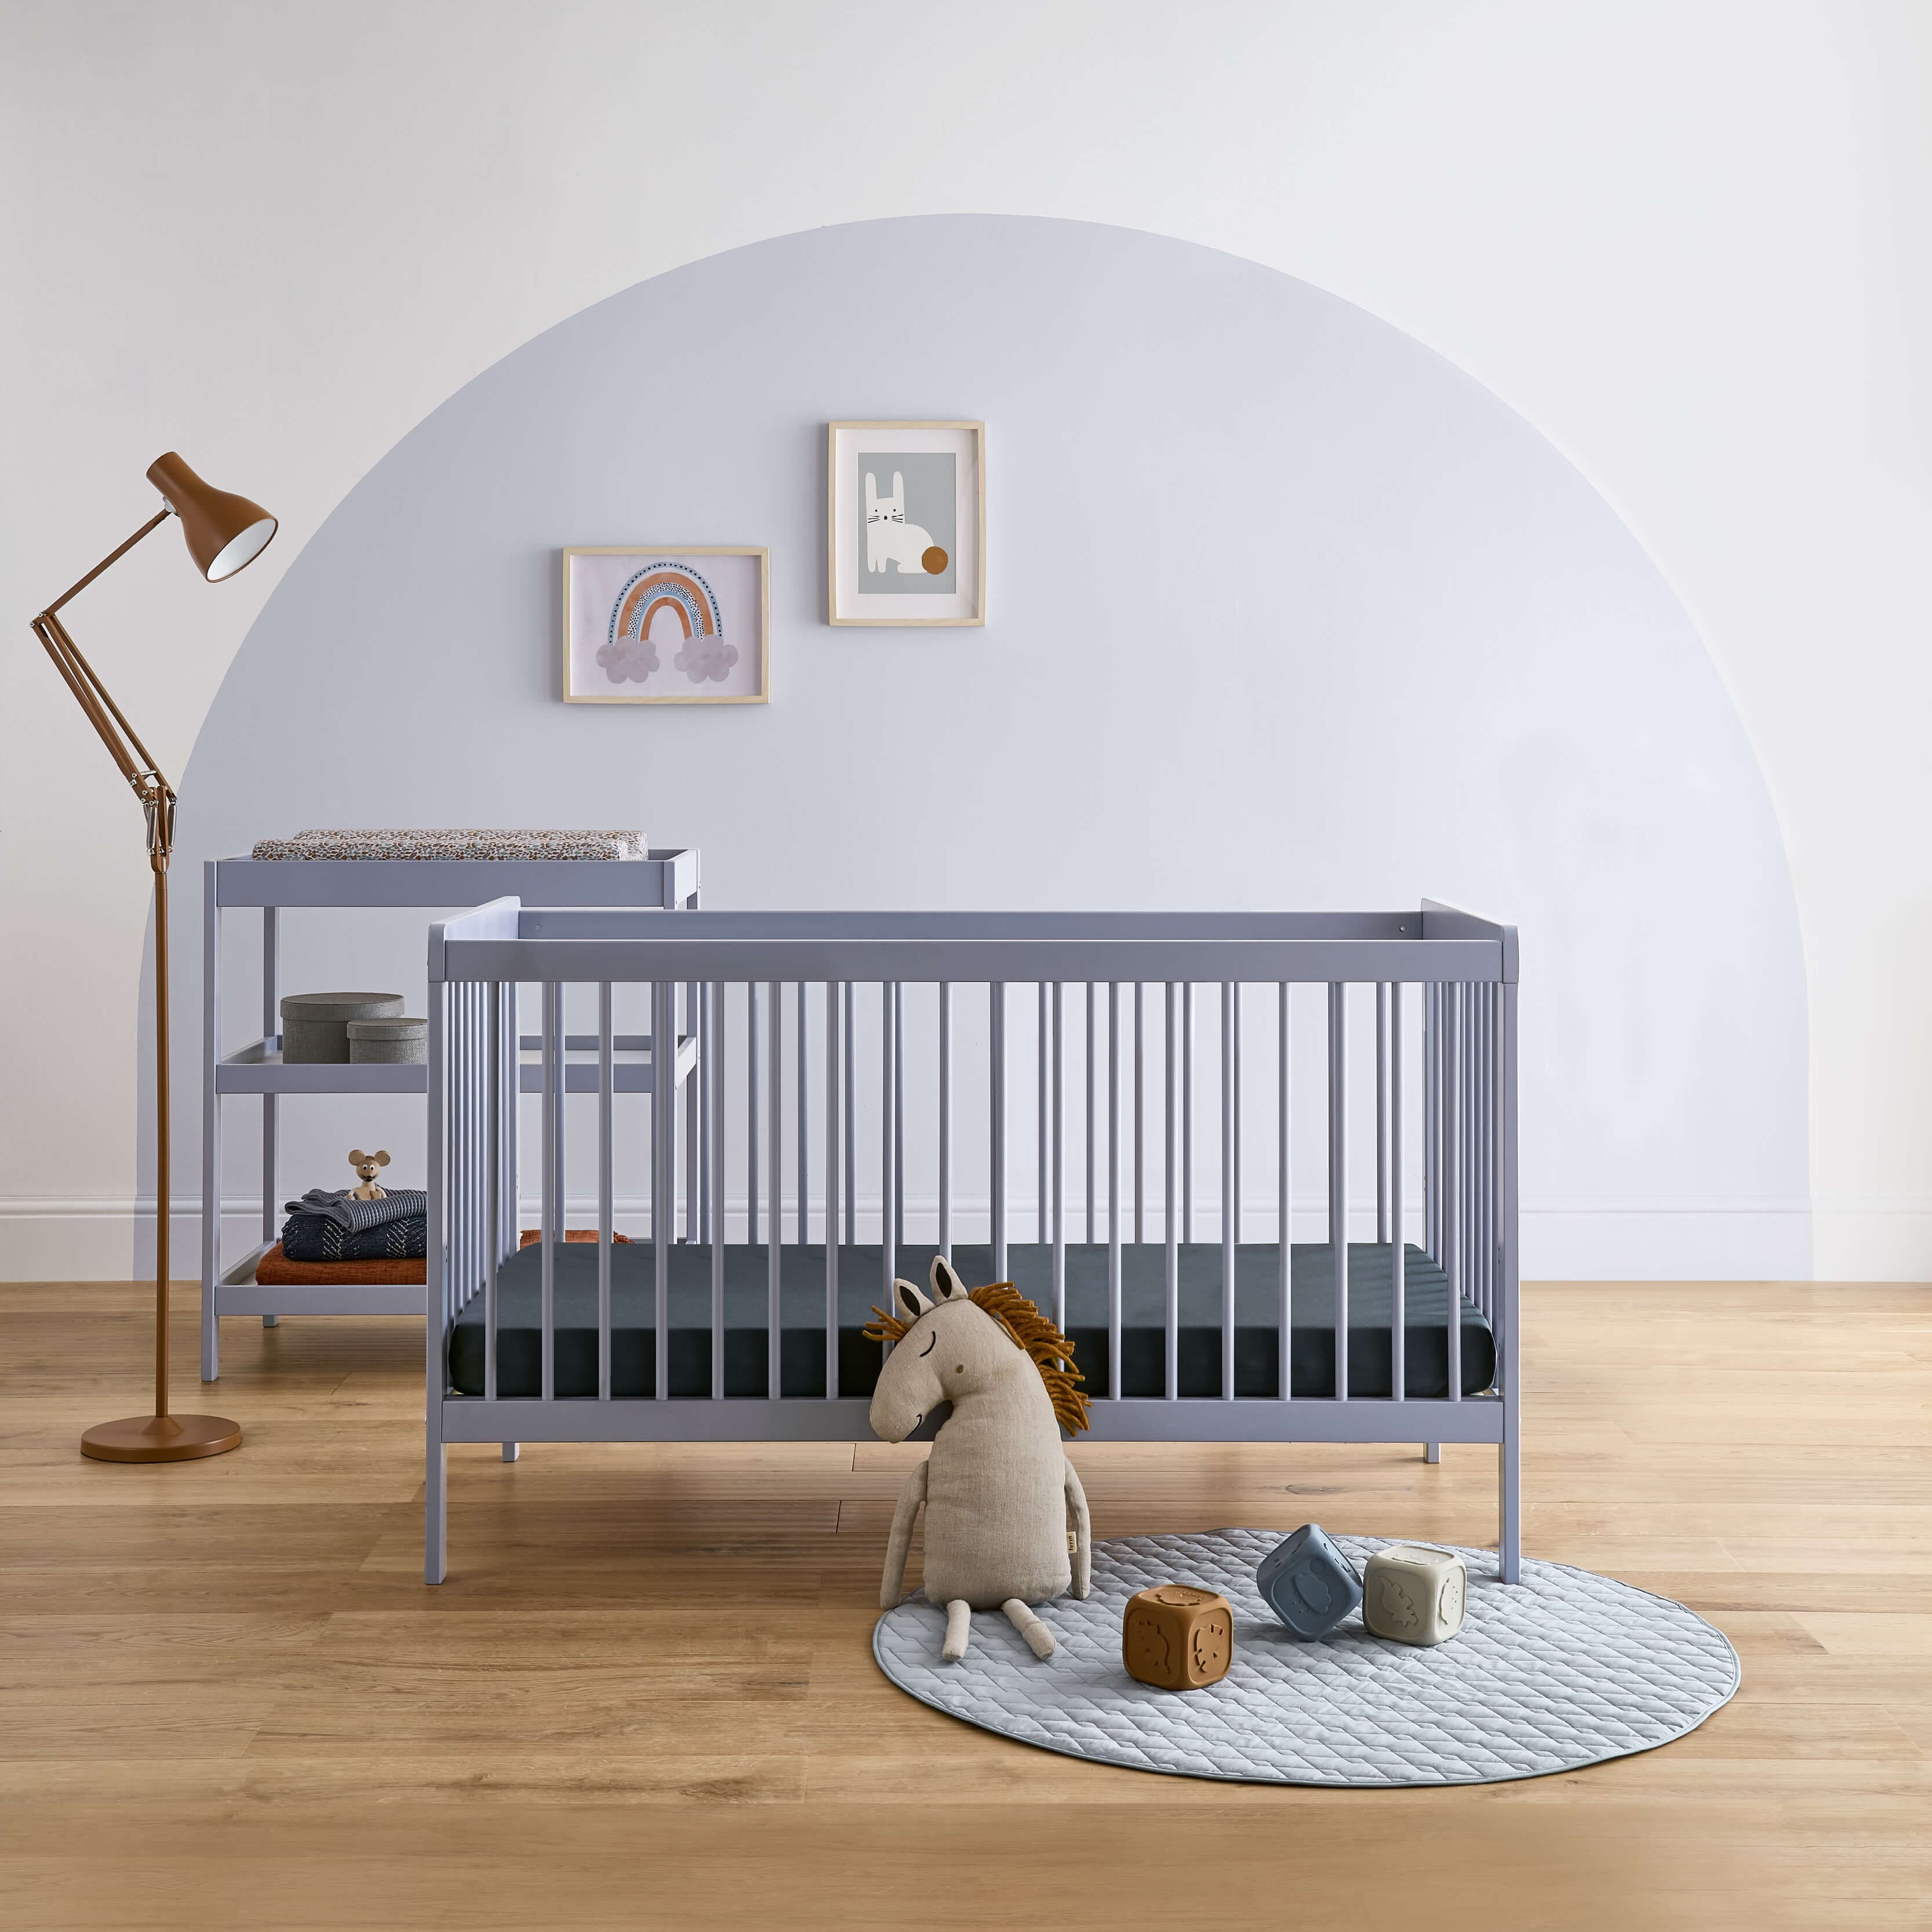 Cuddleco Nola 2 Piece Nursery Furniture Set - Flint Blue - For Your Little One